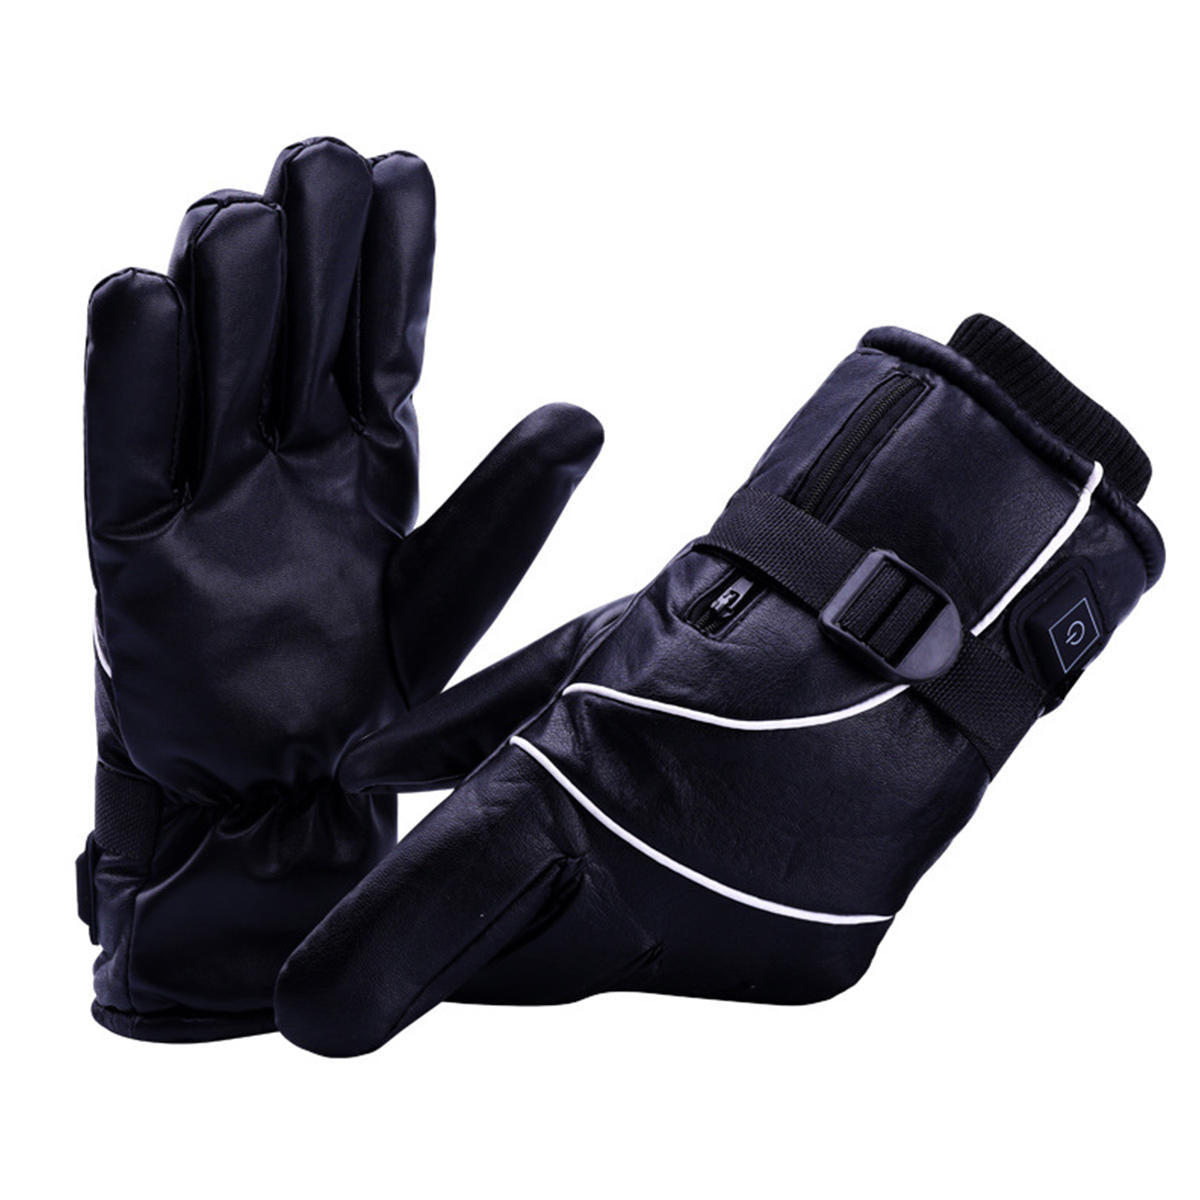 4000/6000mAh Electric Battery Heating Gloves Men Women Winter Heated Warmer Sport Protector